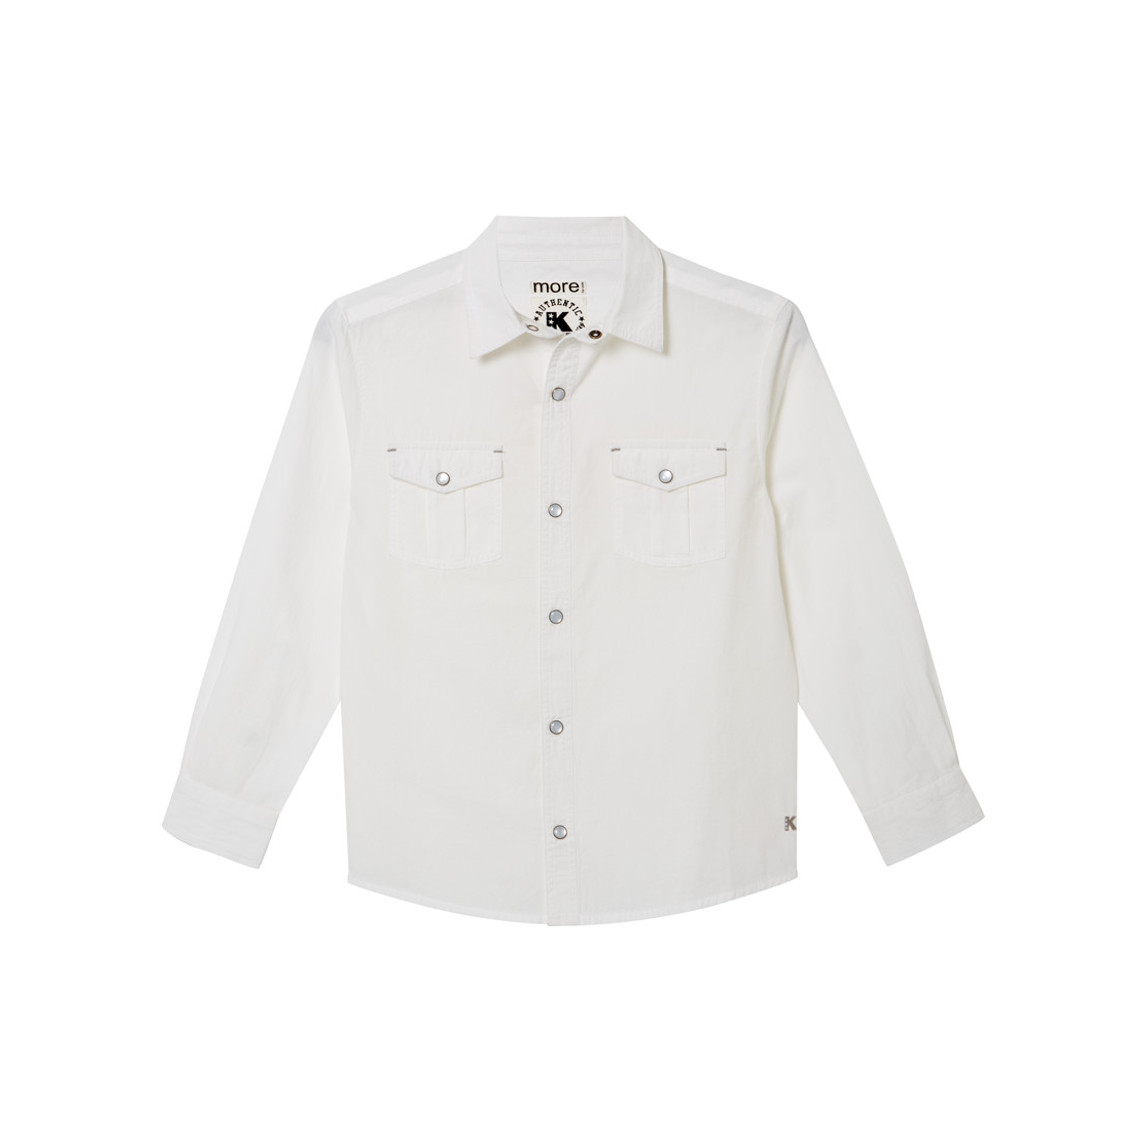 White Plus Size, Generous Fit, Authentic Boys Shirt | 28 - 42 inch chest